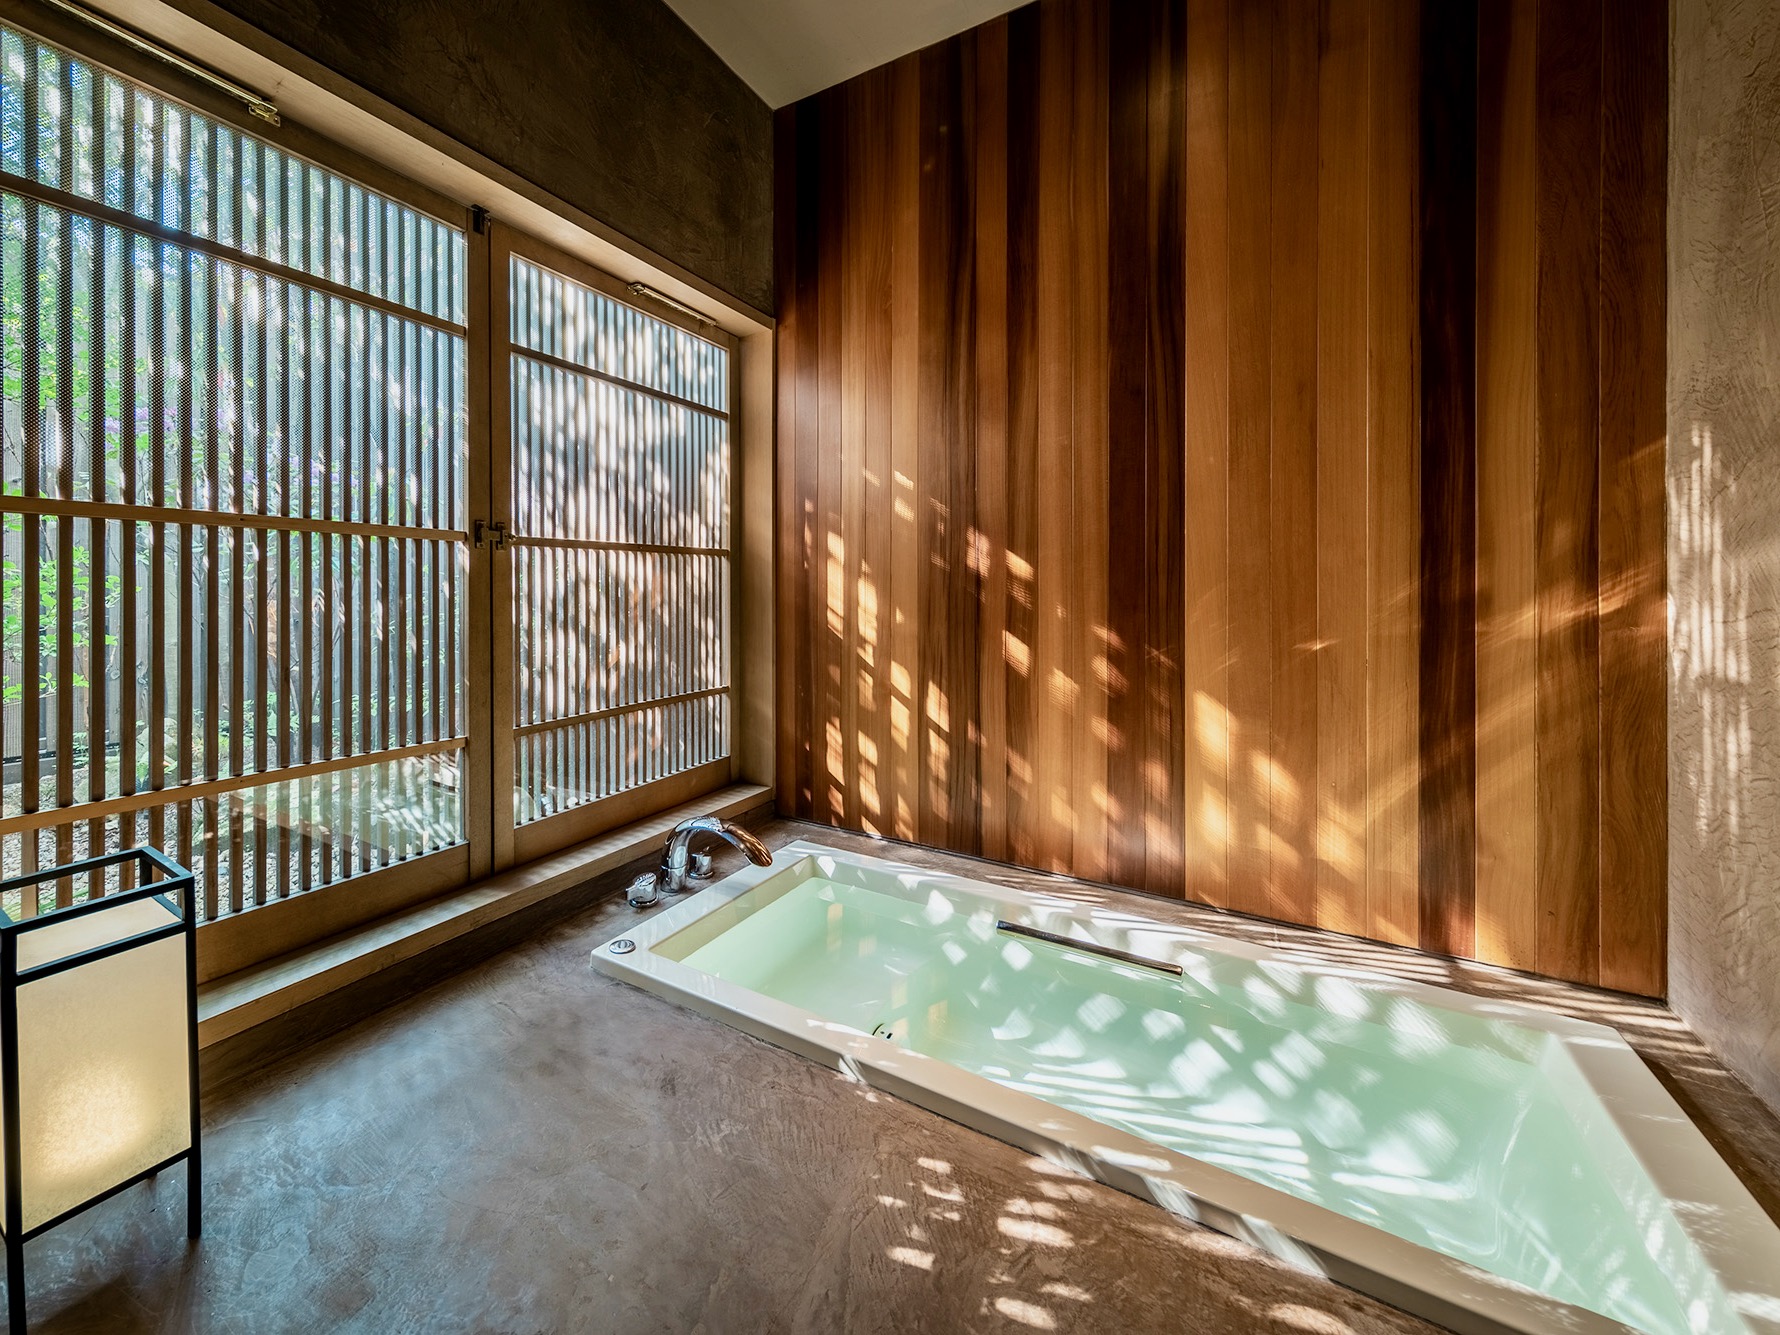 Japanese Baths- Machiya House Features